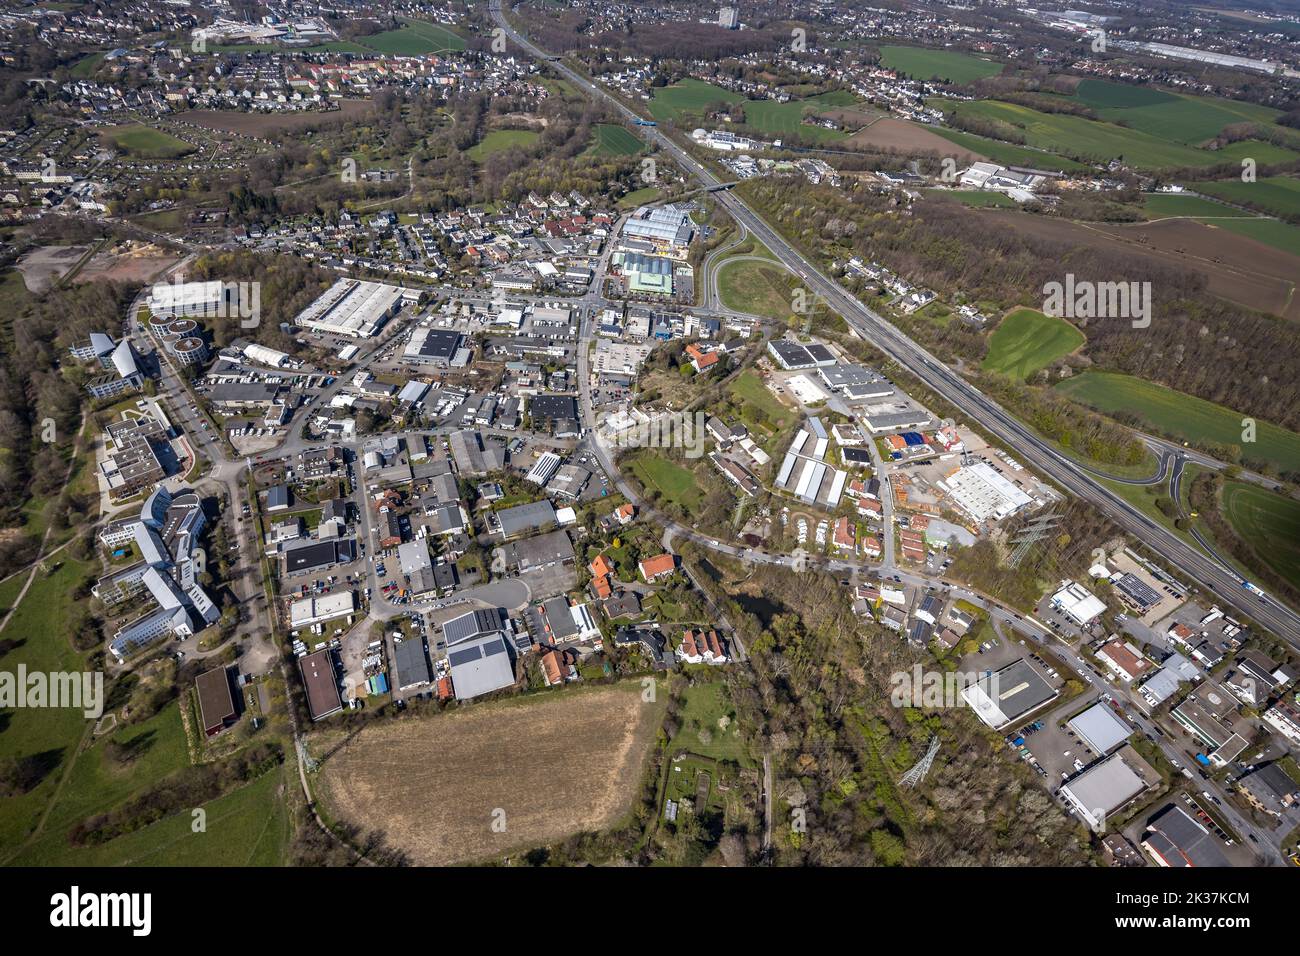 Vista aérea, parque industrial Liegnizer Straße en la autopista A44, Universidad Witten Herdecke, Annen, Witten, área de Ruhr, Renania del Norte-Westfalia, Germa Foto de stock